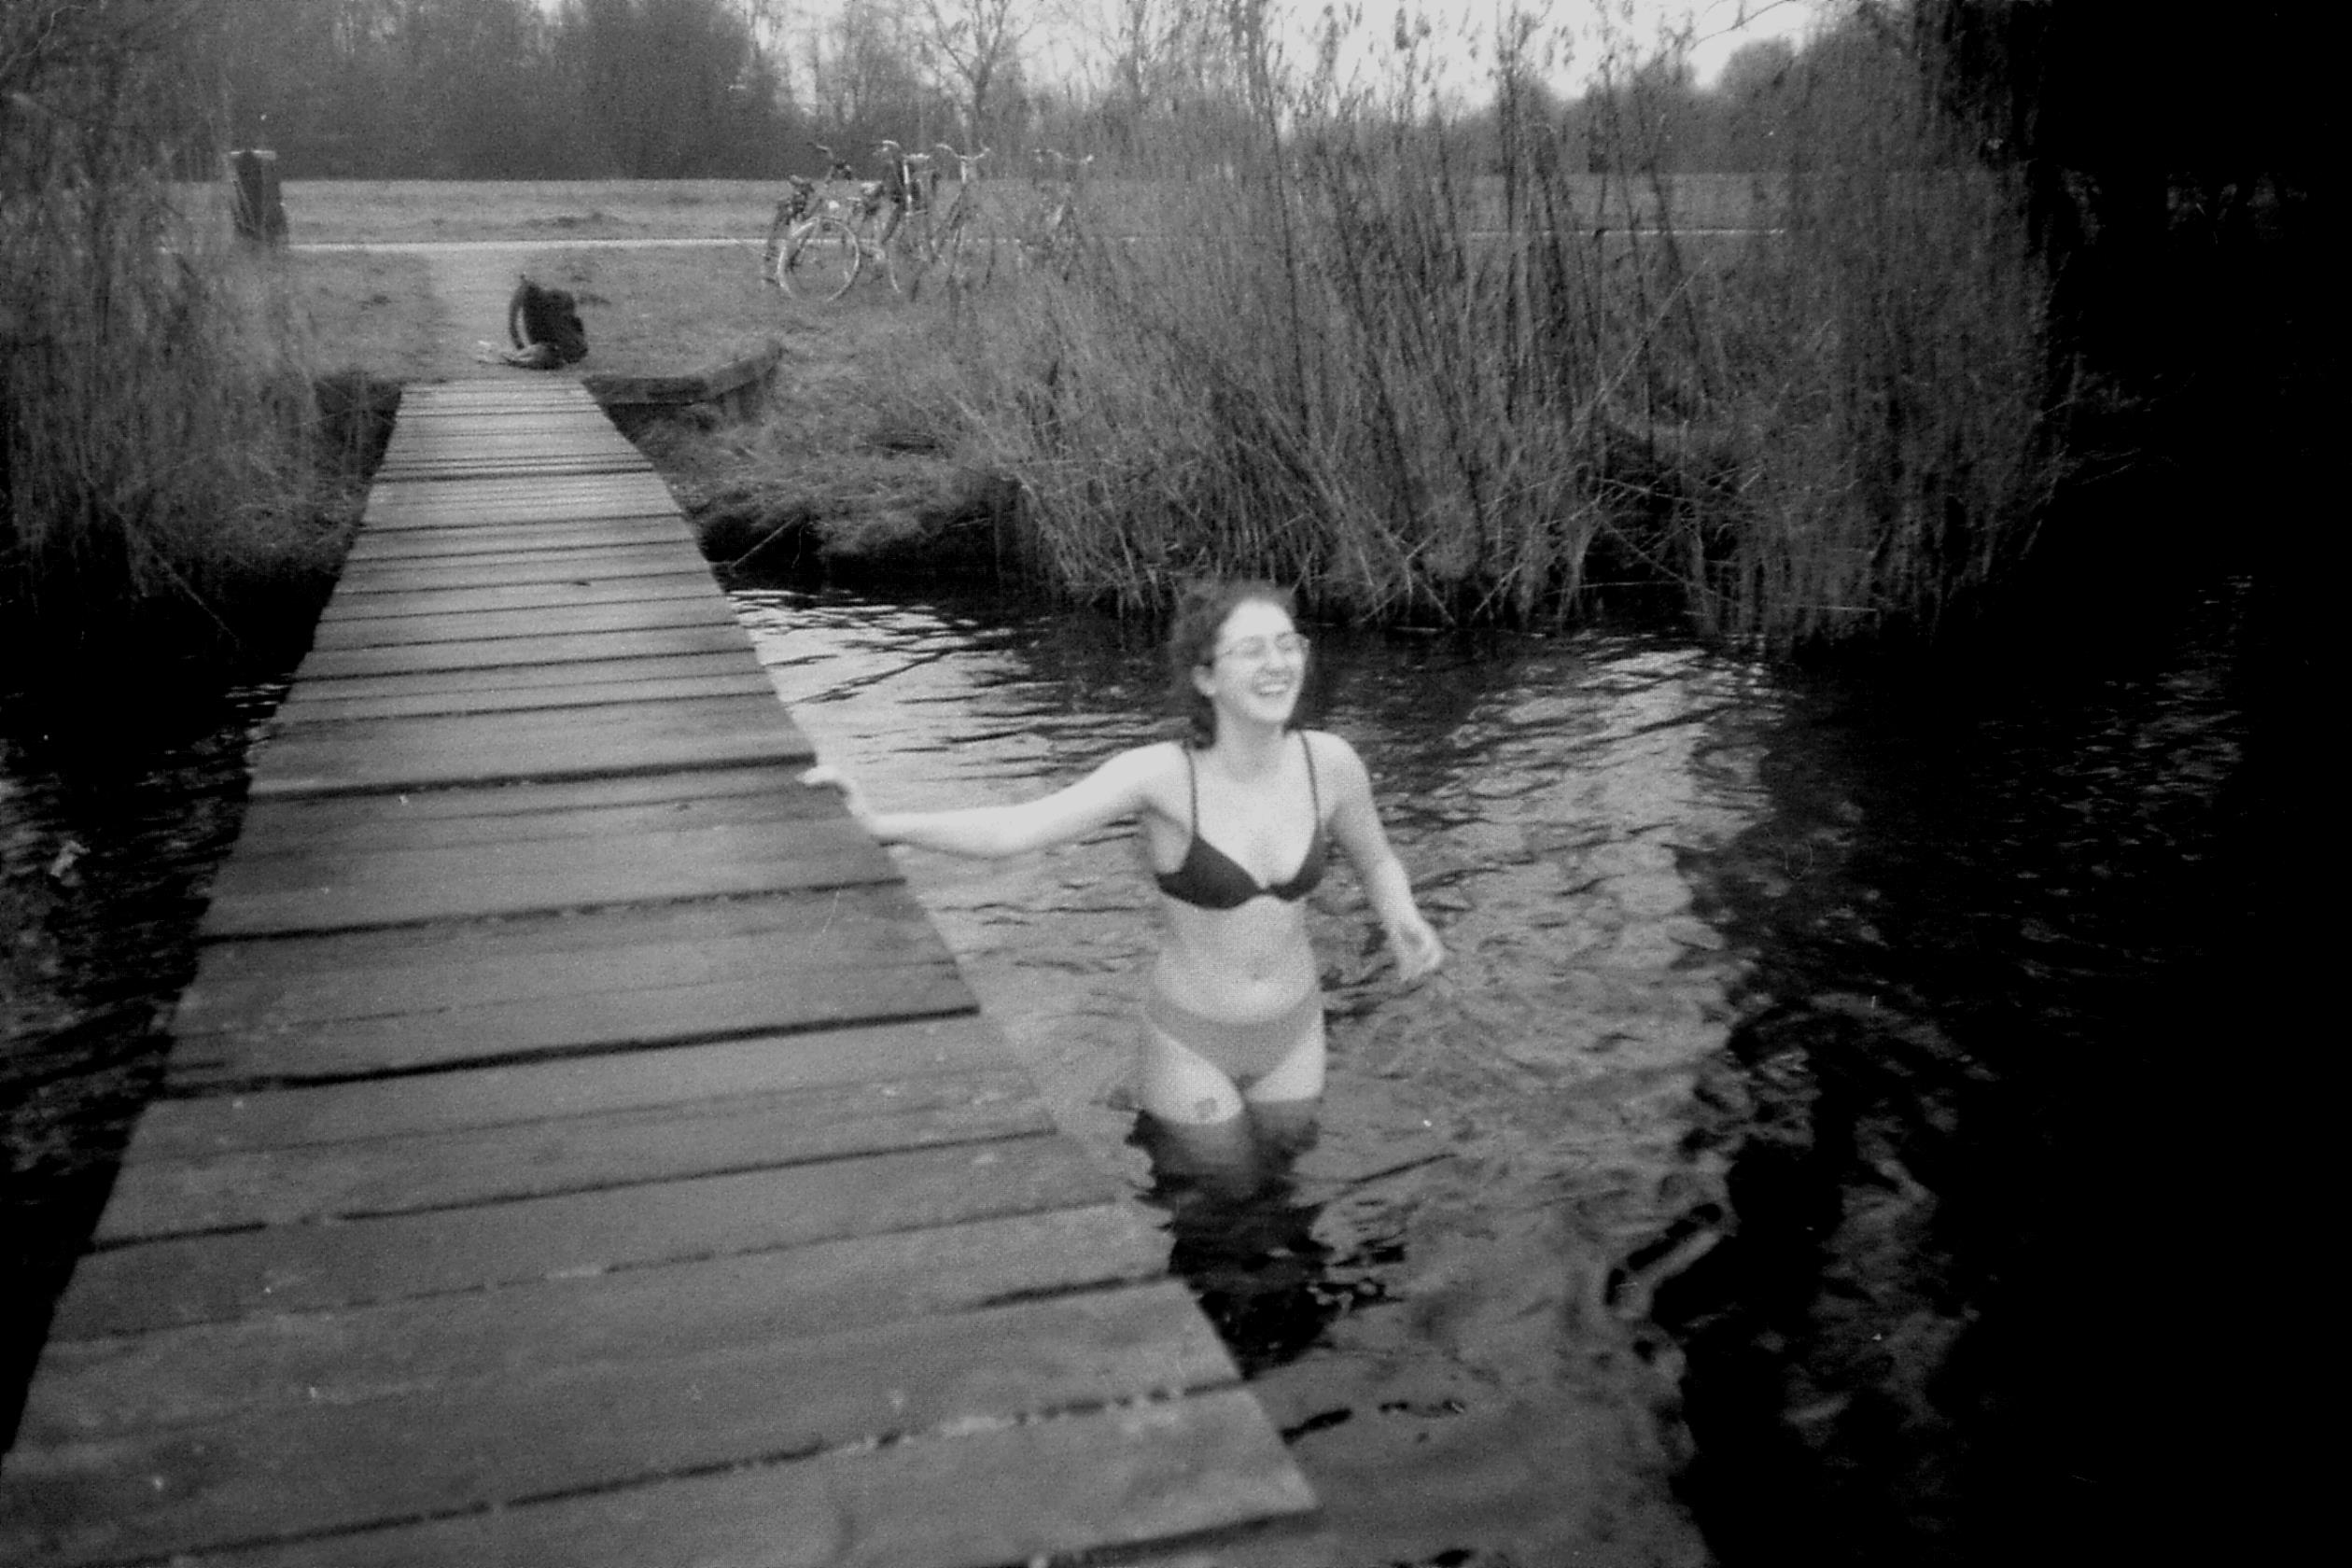 dani in her underwear in a lake